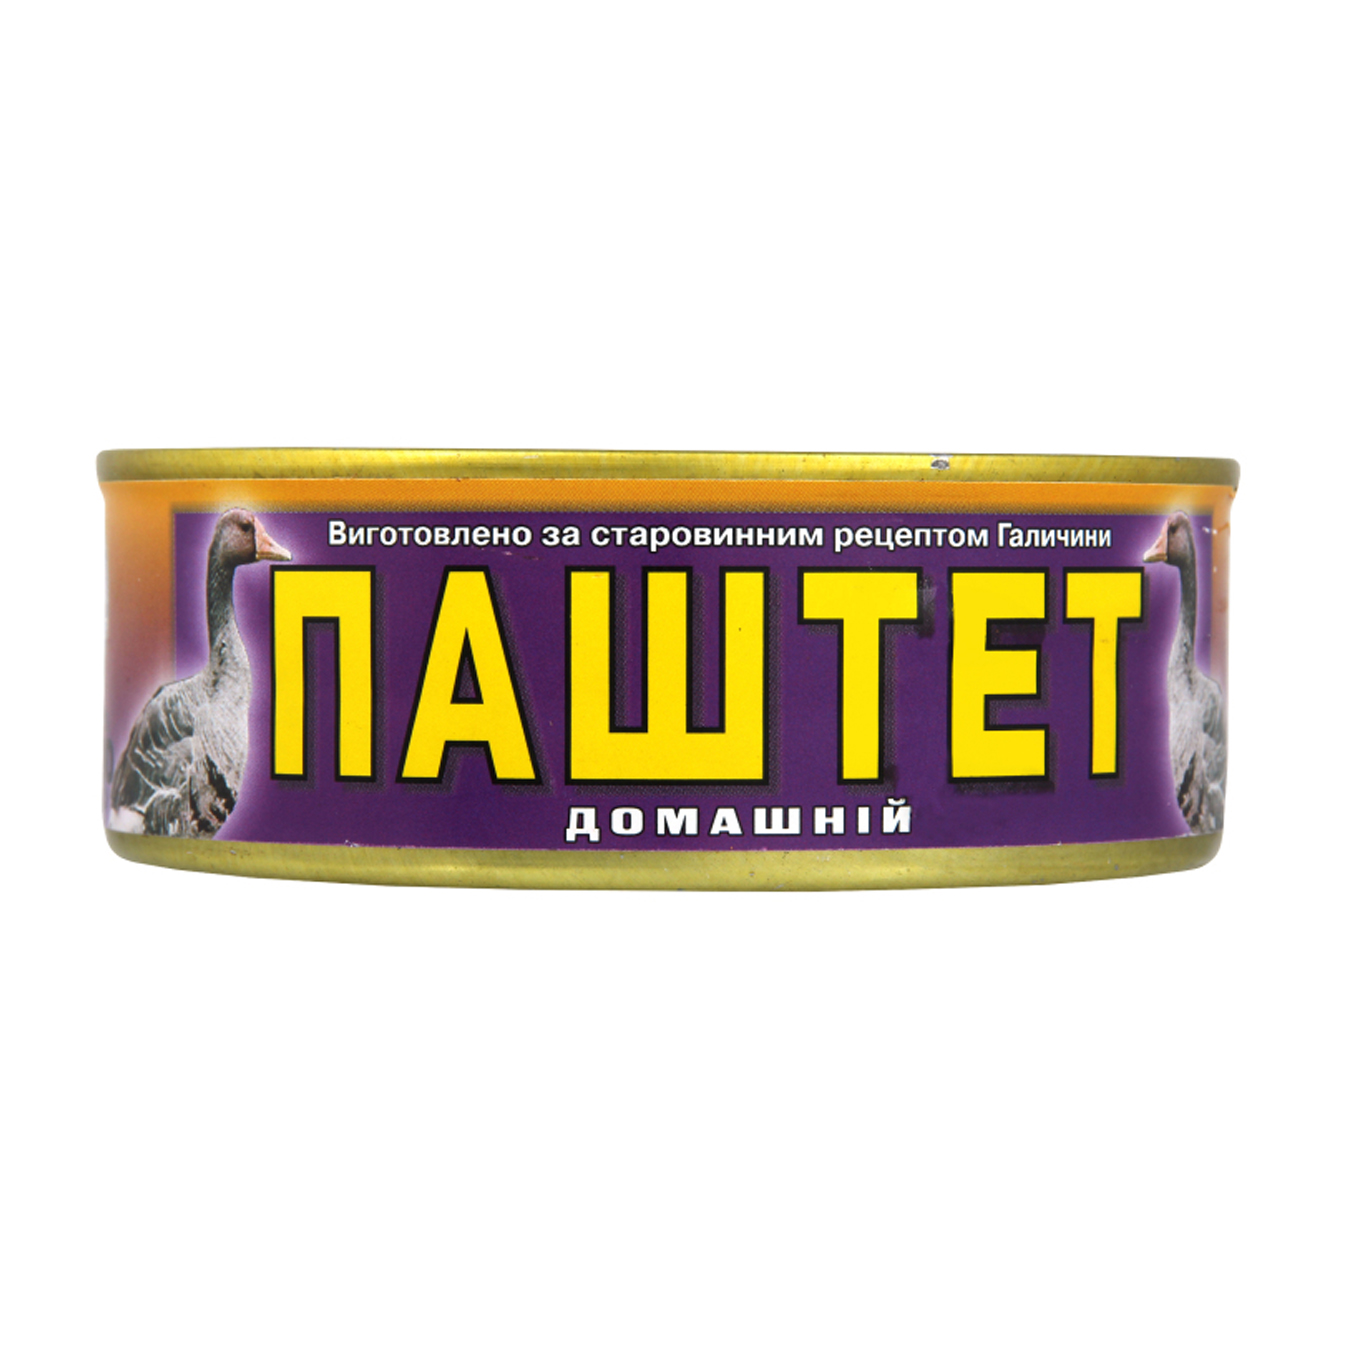 Galytsky Smak Homemade Pate 250g